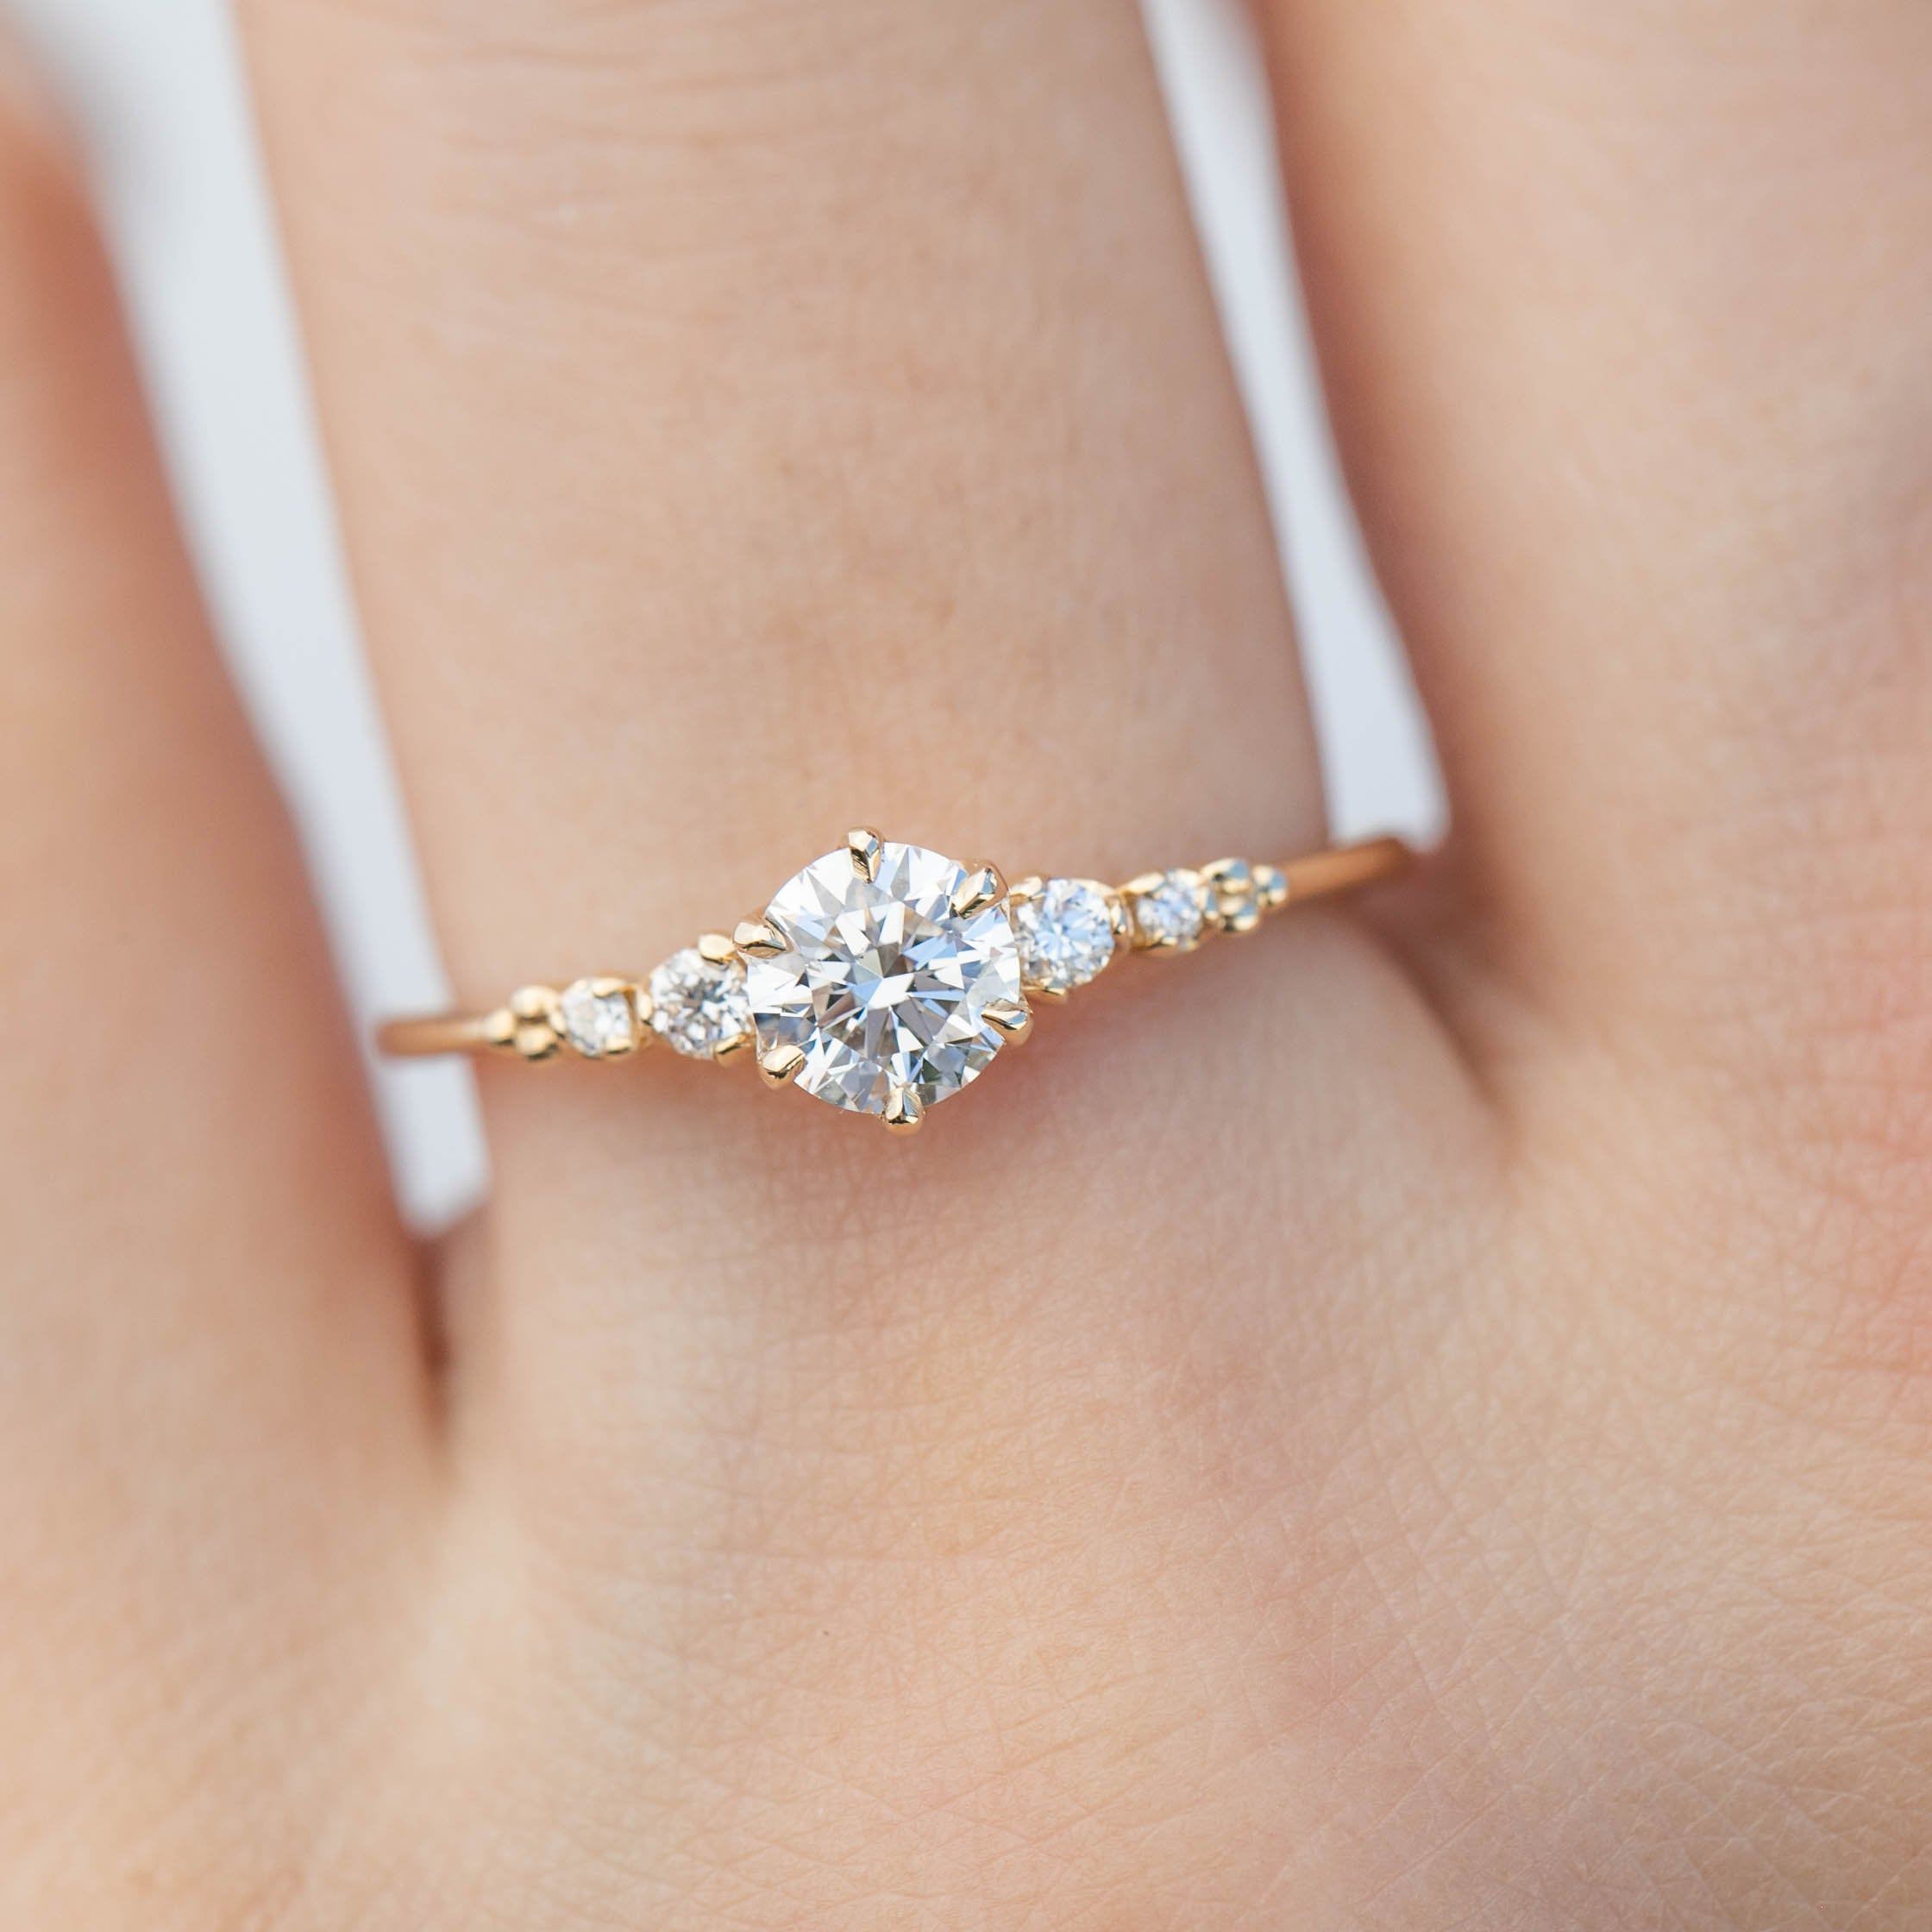 Stylish and amazing gold diamond rings for engagement